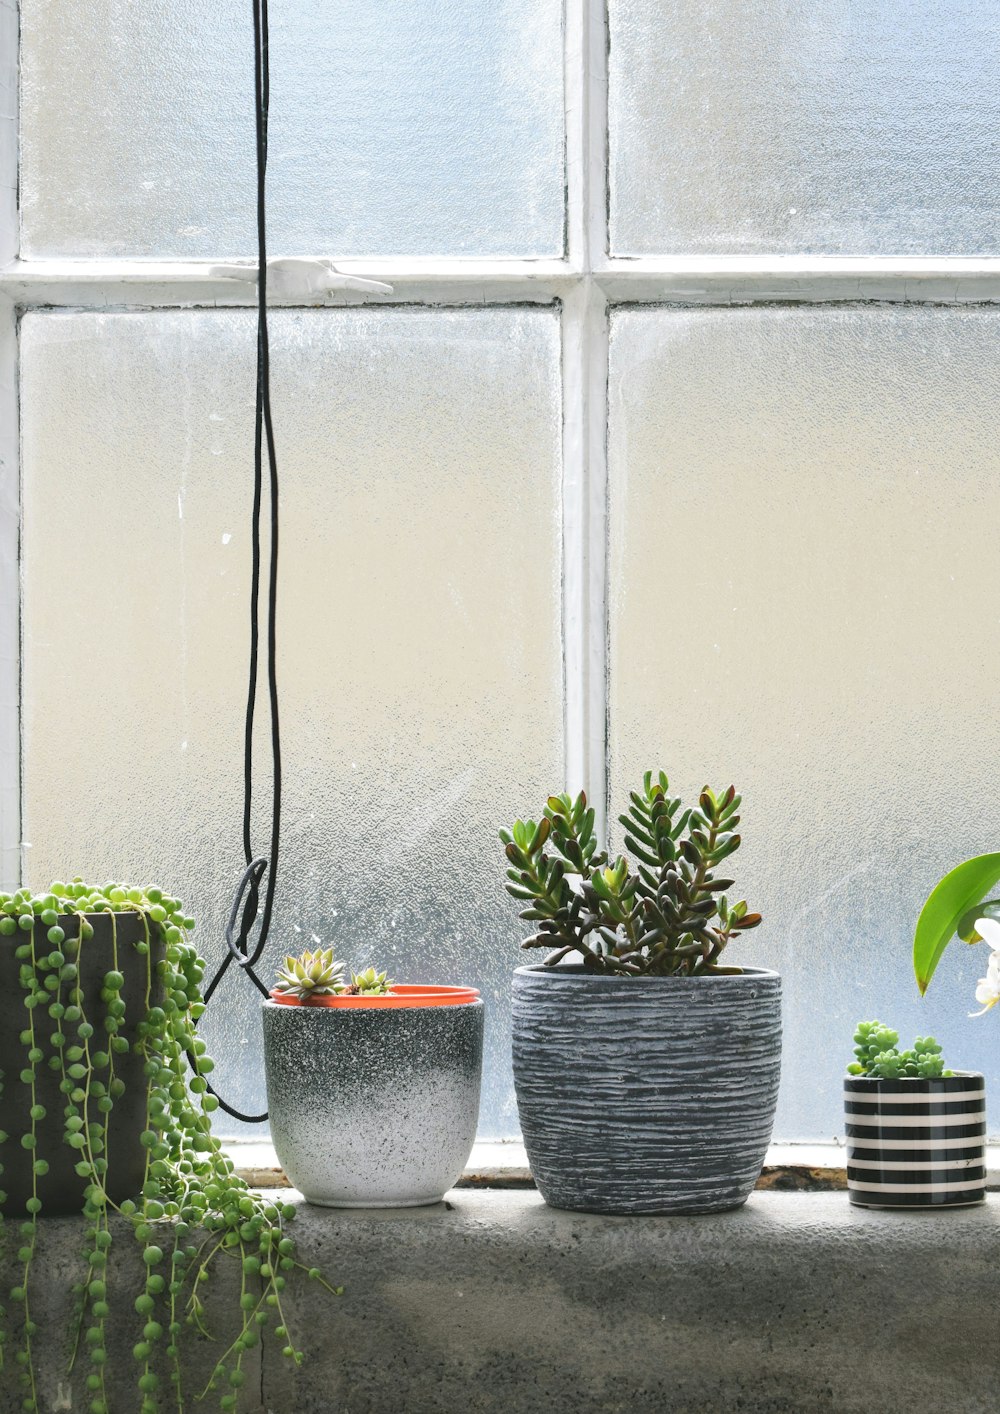 quatro vasos de plantas colocados perto da janela